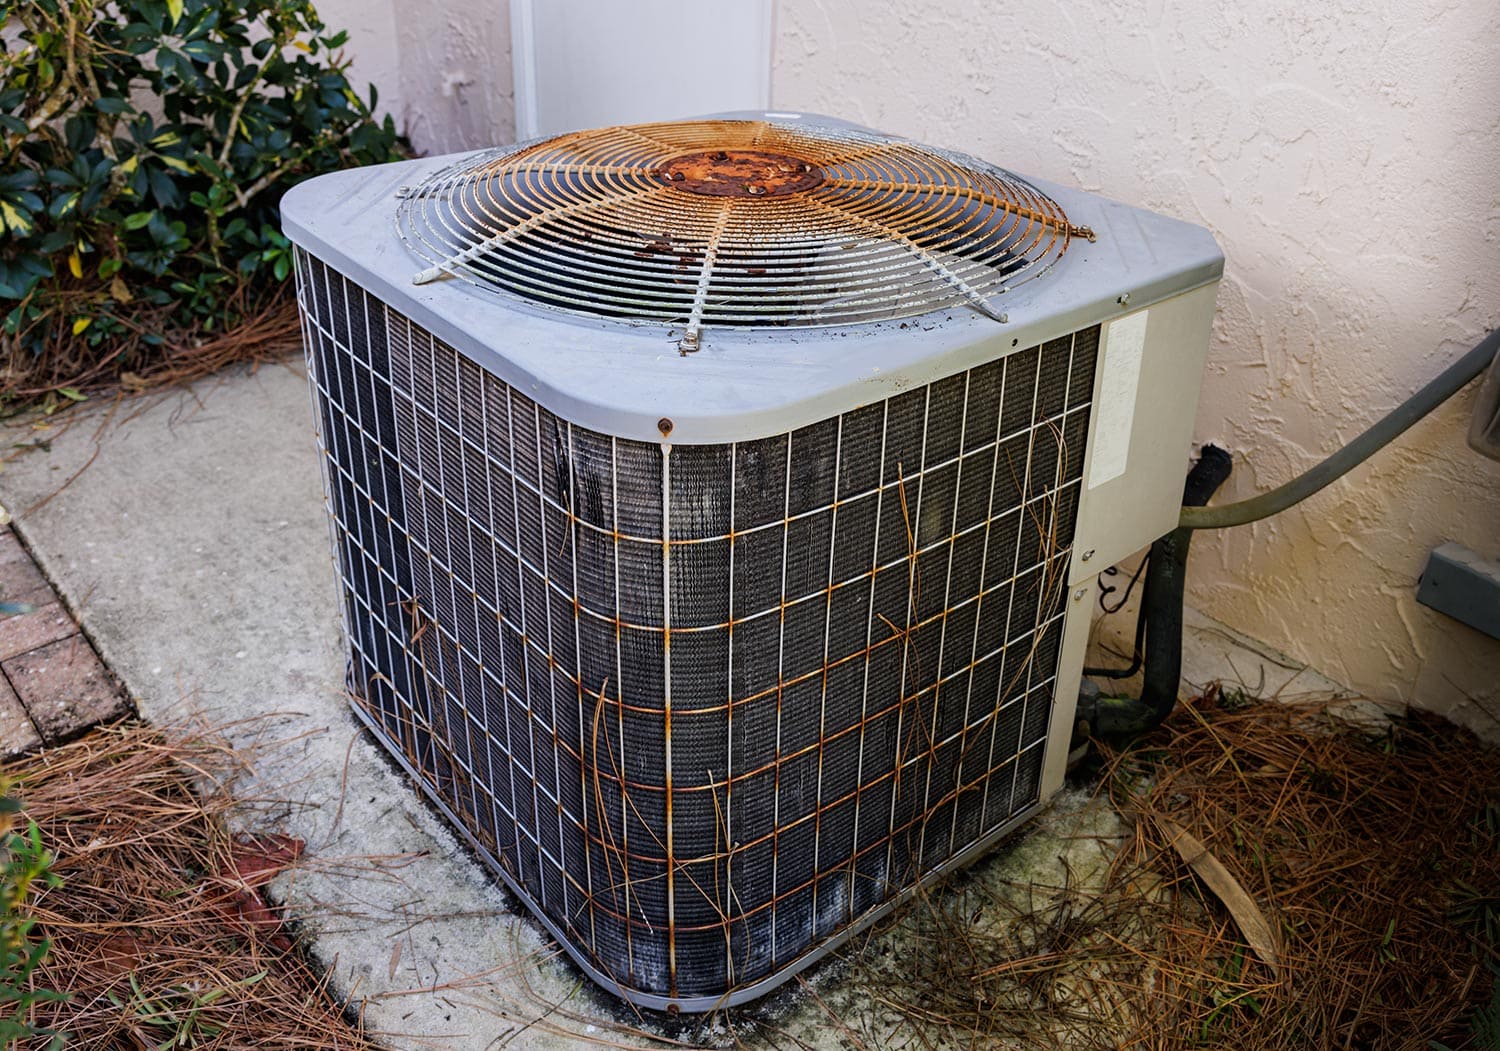 Rusty HVAC air conditioner in need of repair